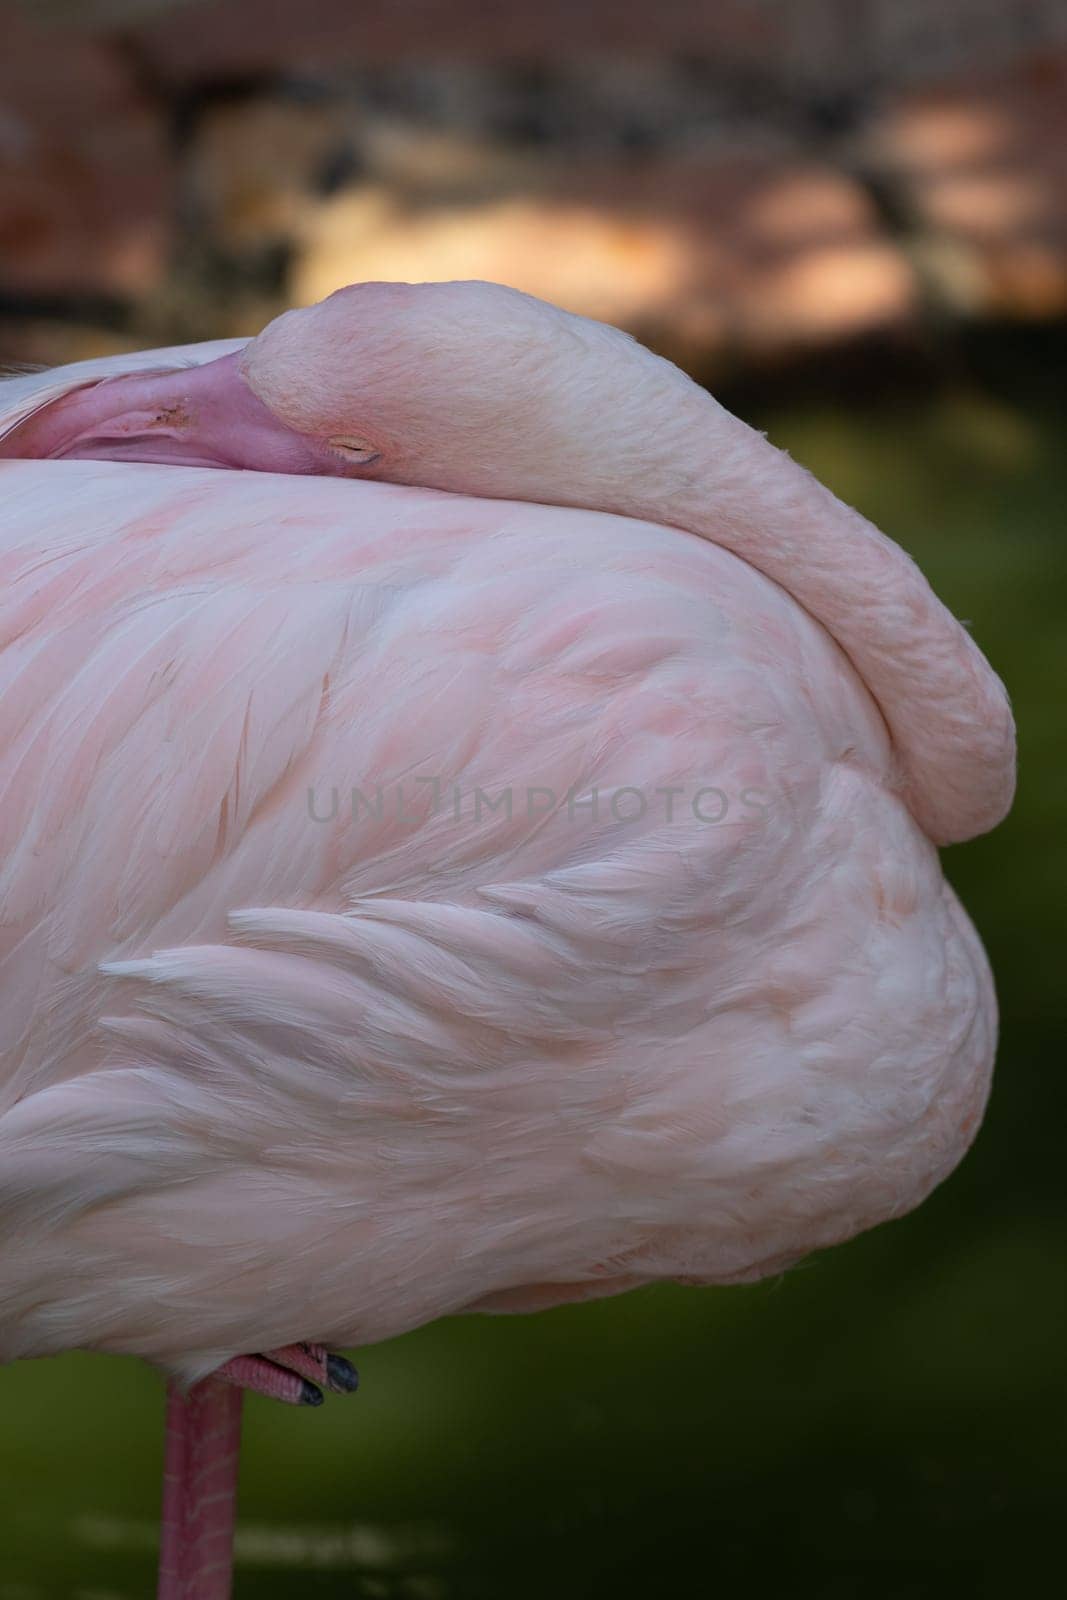 Pink flamingo - a beautiful bird. High quality photo